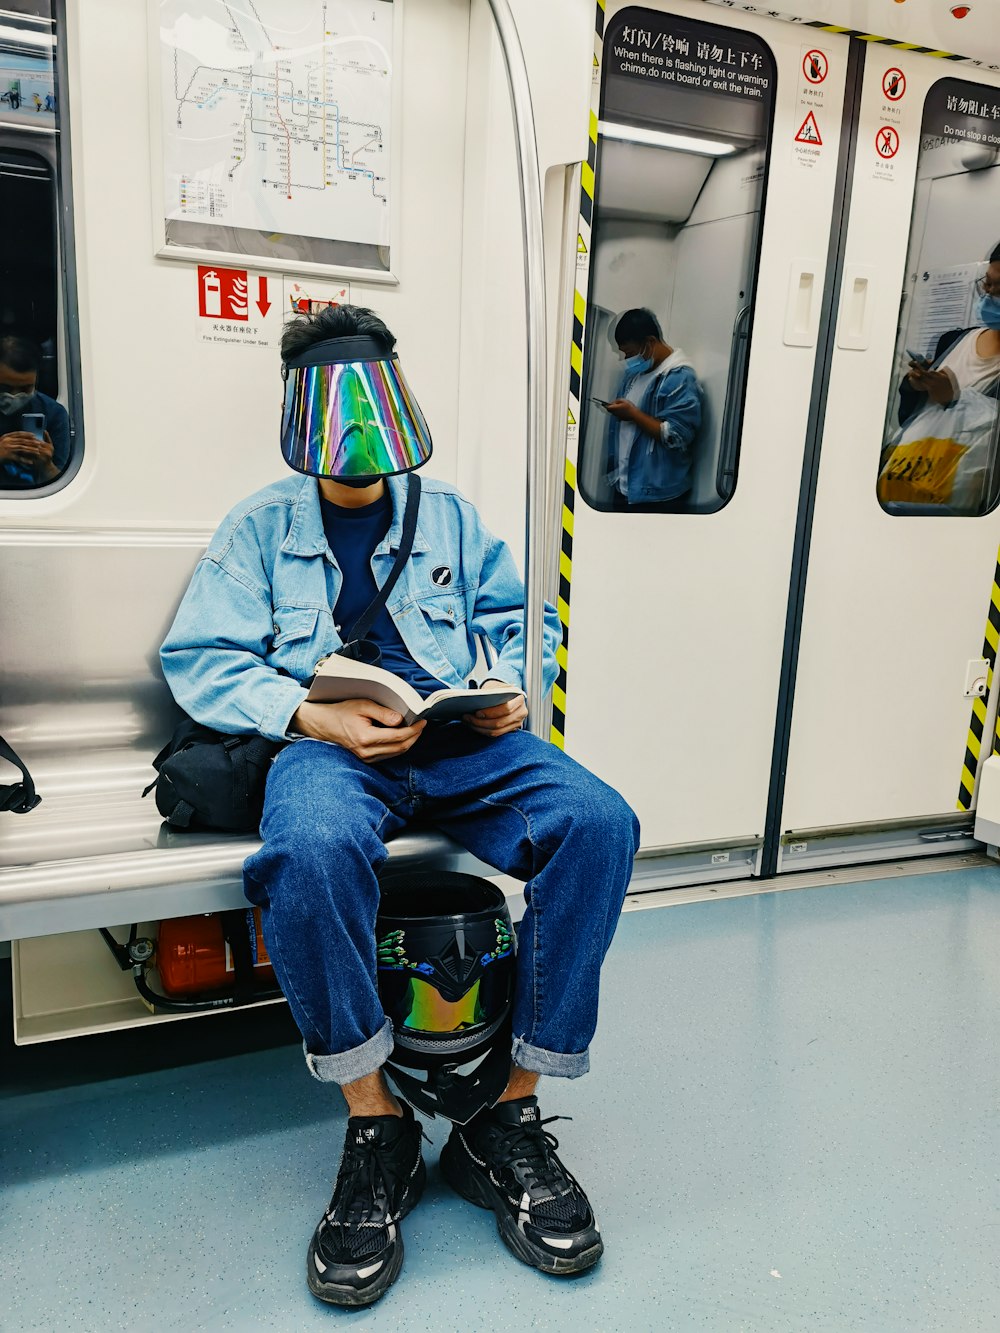 man in blue jacket sitting on train seat